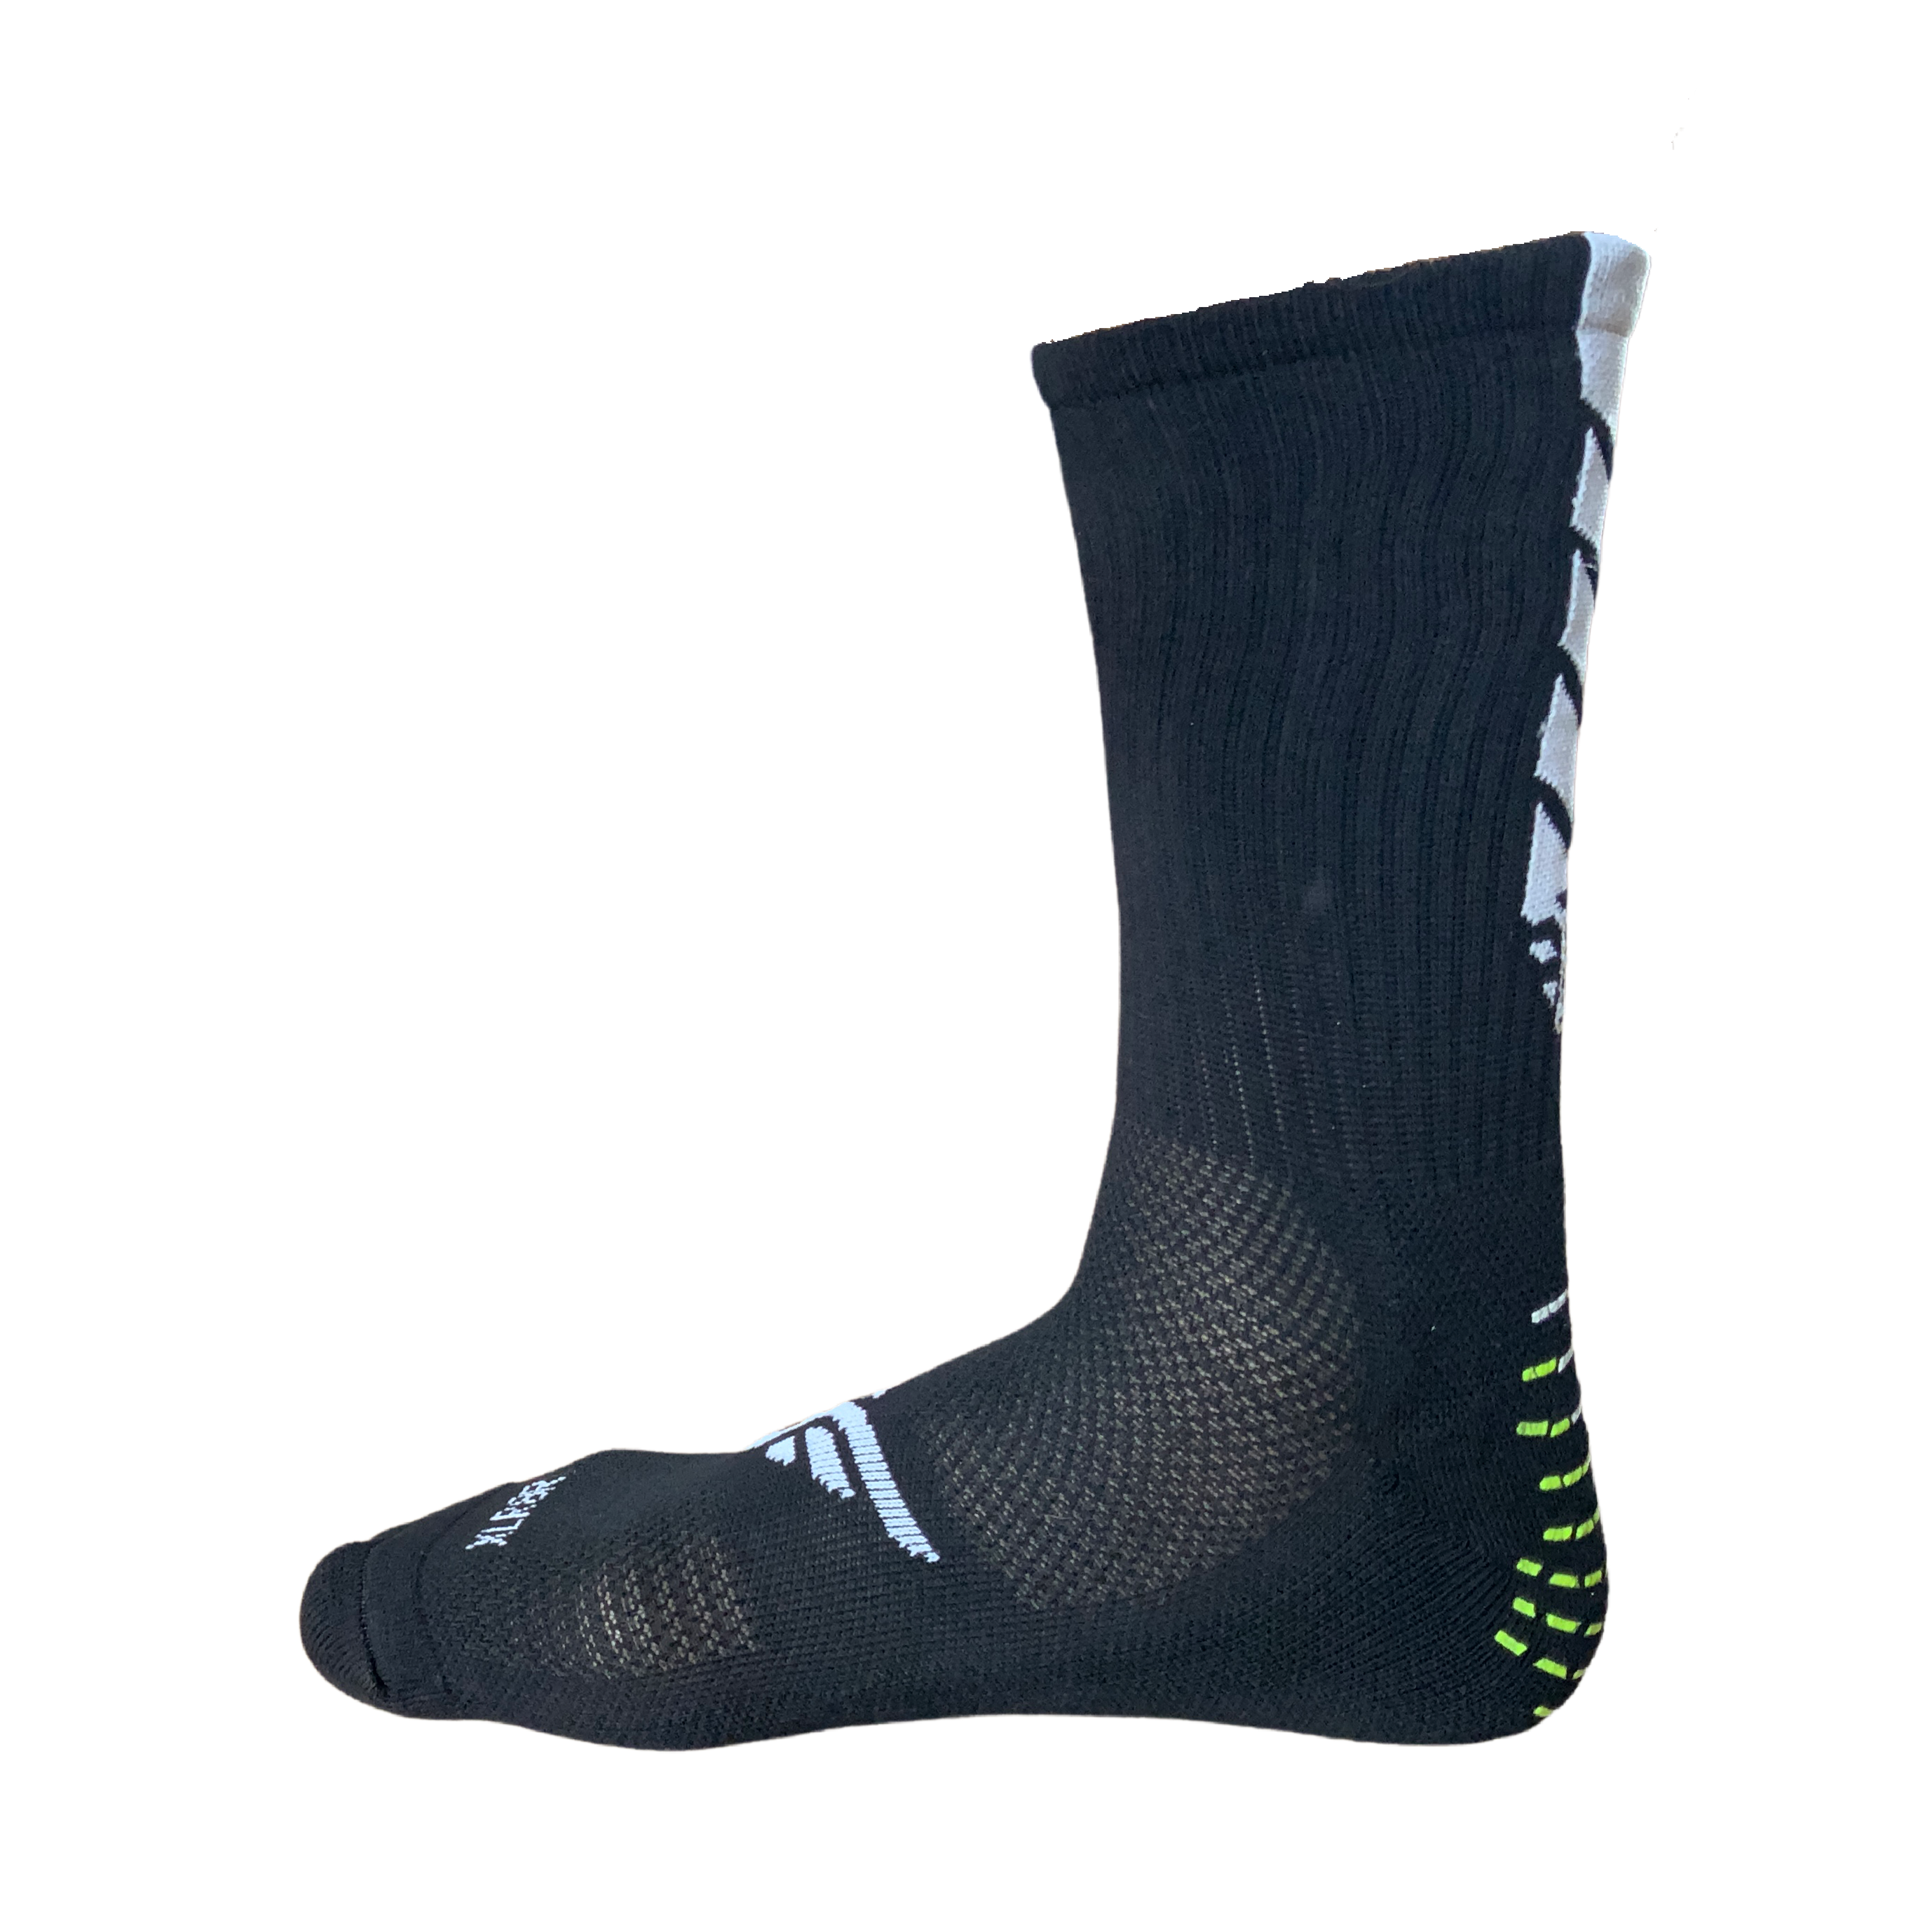 For The Footballer XLR8R Compression Grip Sock